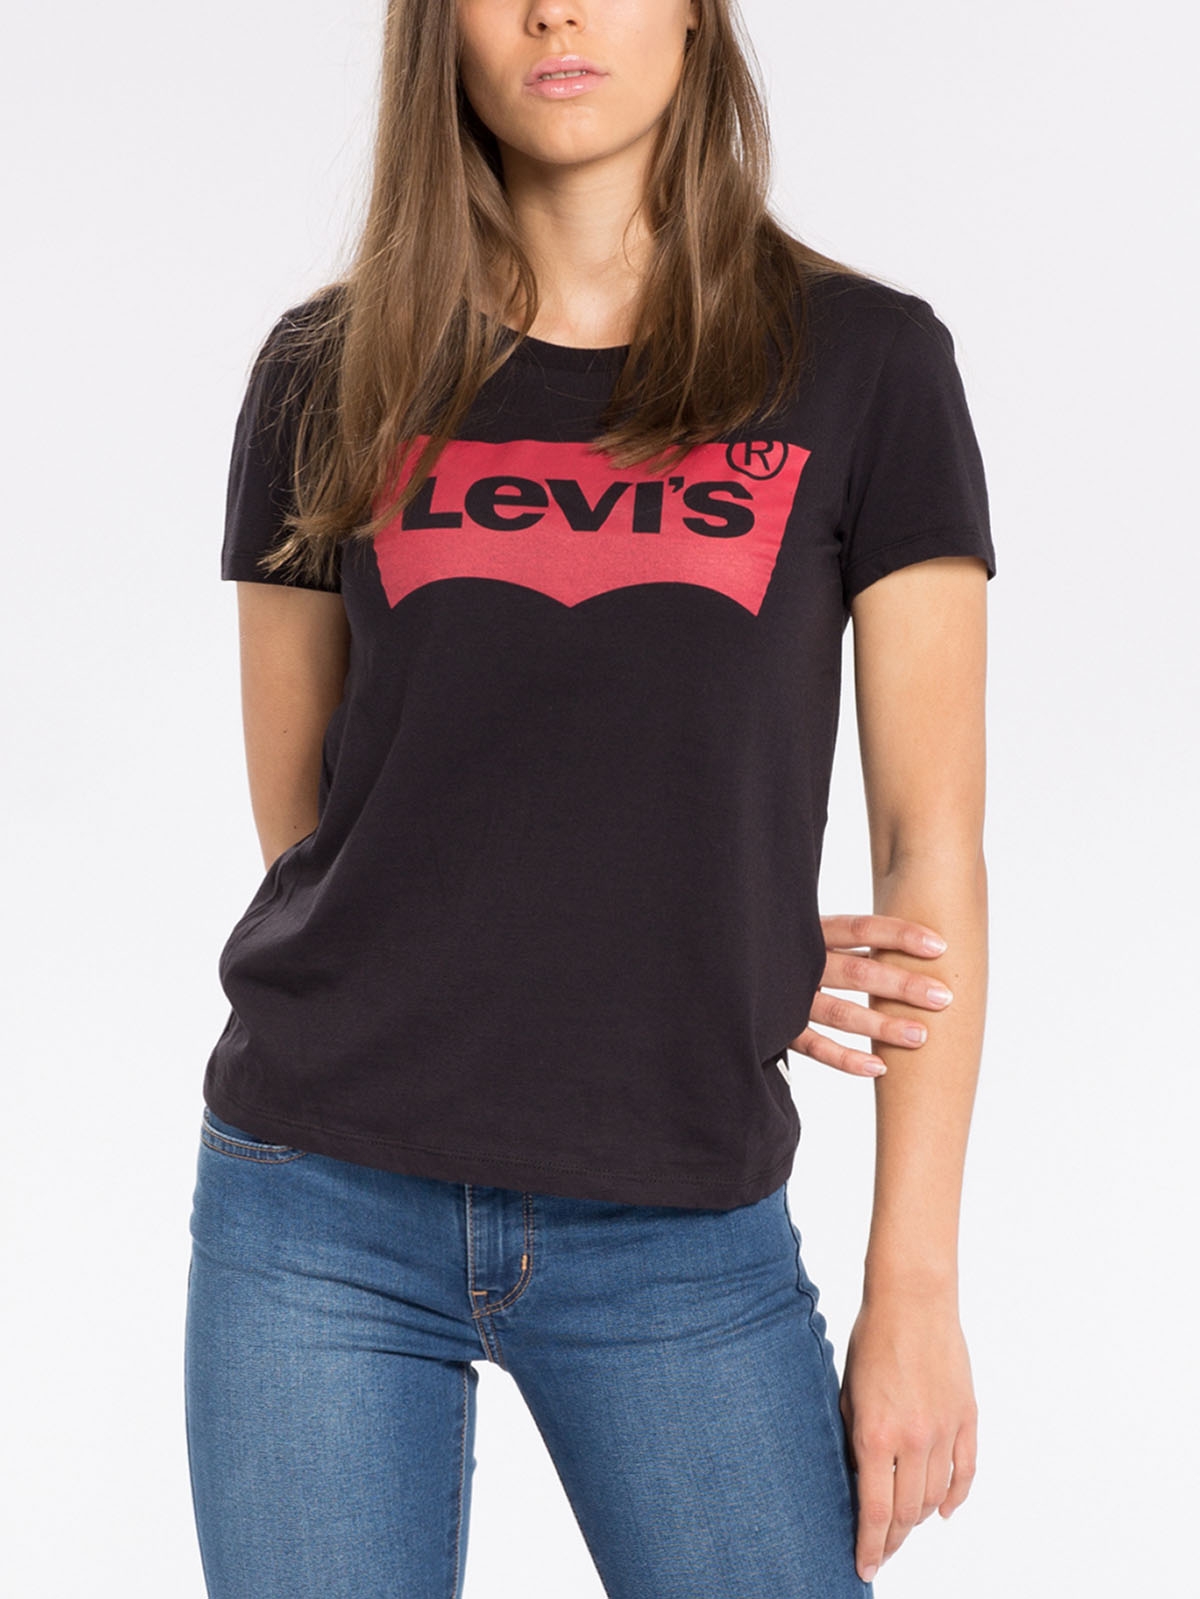 Levi's samarreta logo màniga curta dona 17369-0201 negra